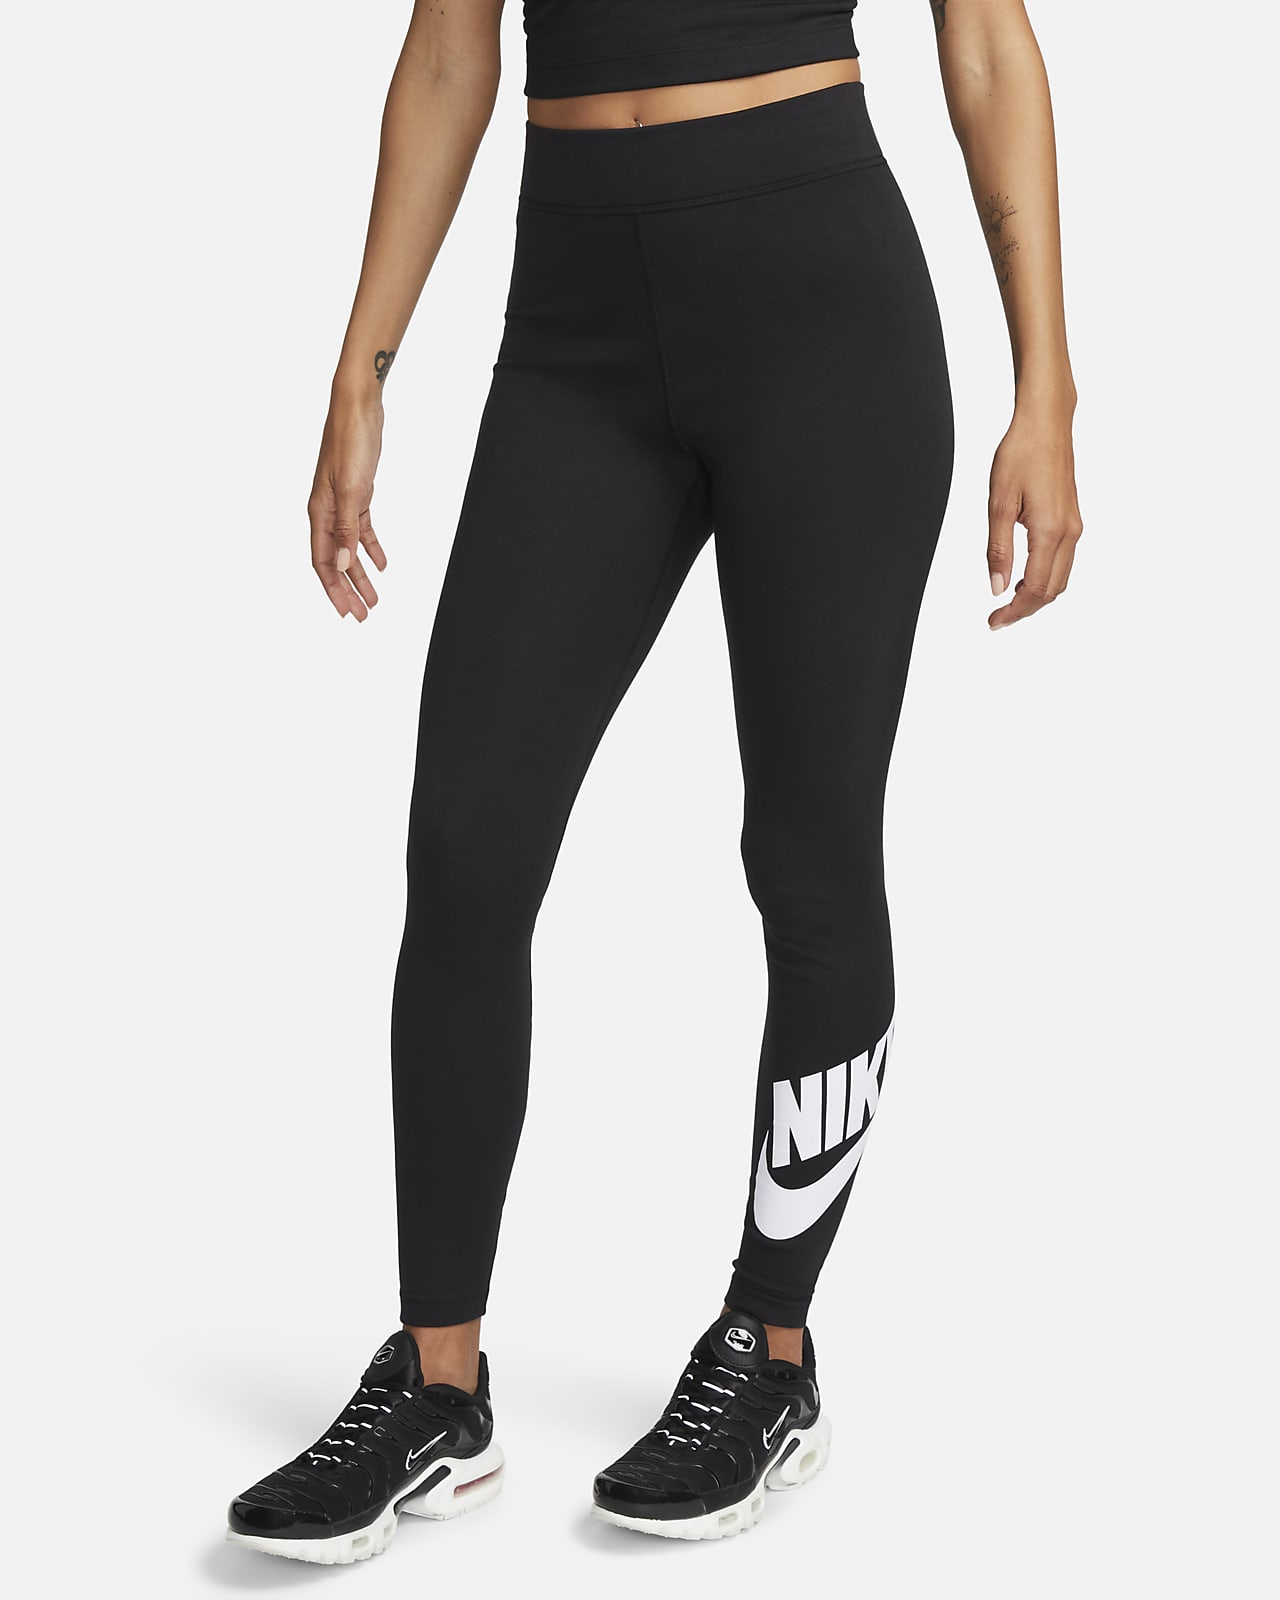 Leggings taille haute pour femme. Nike BE